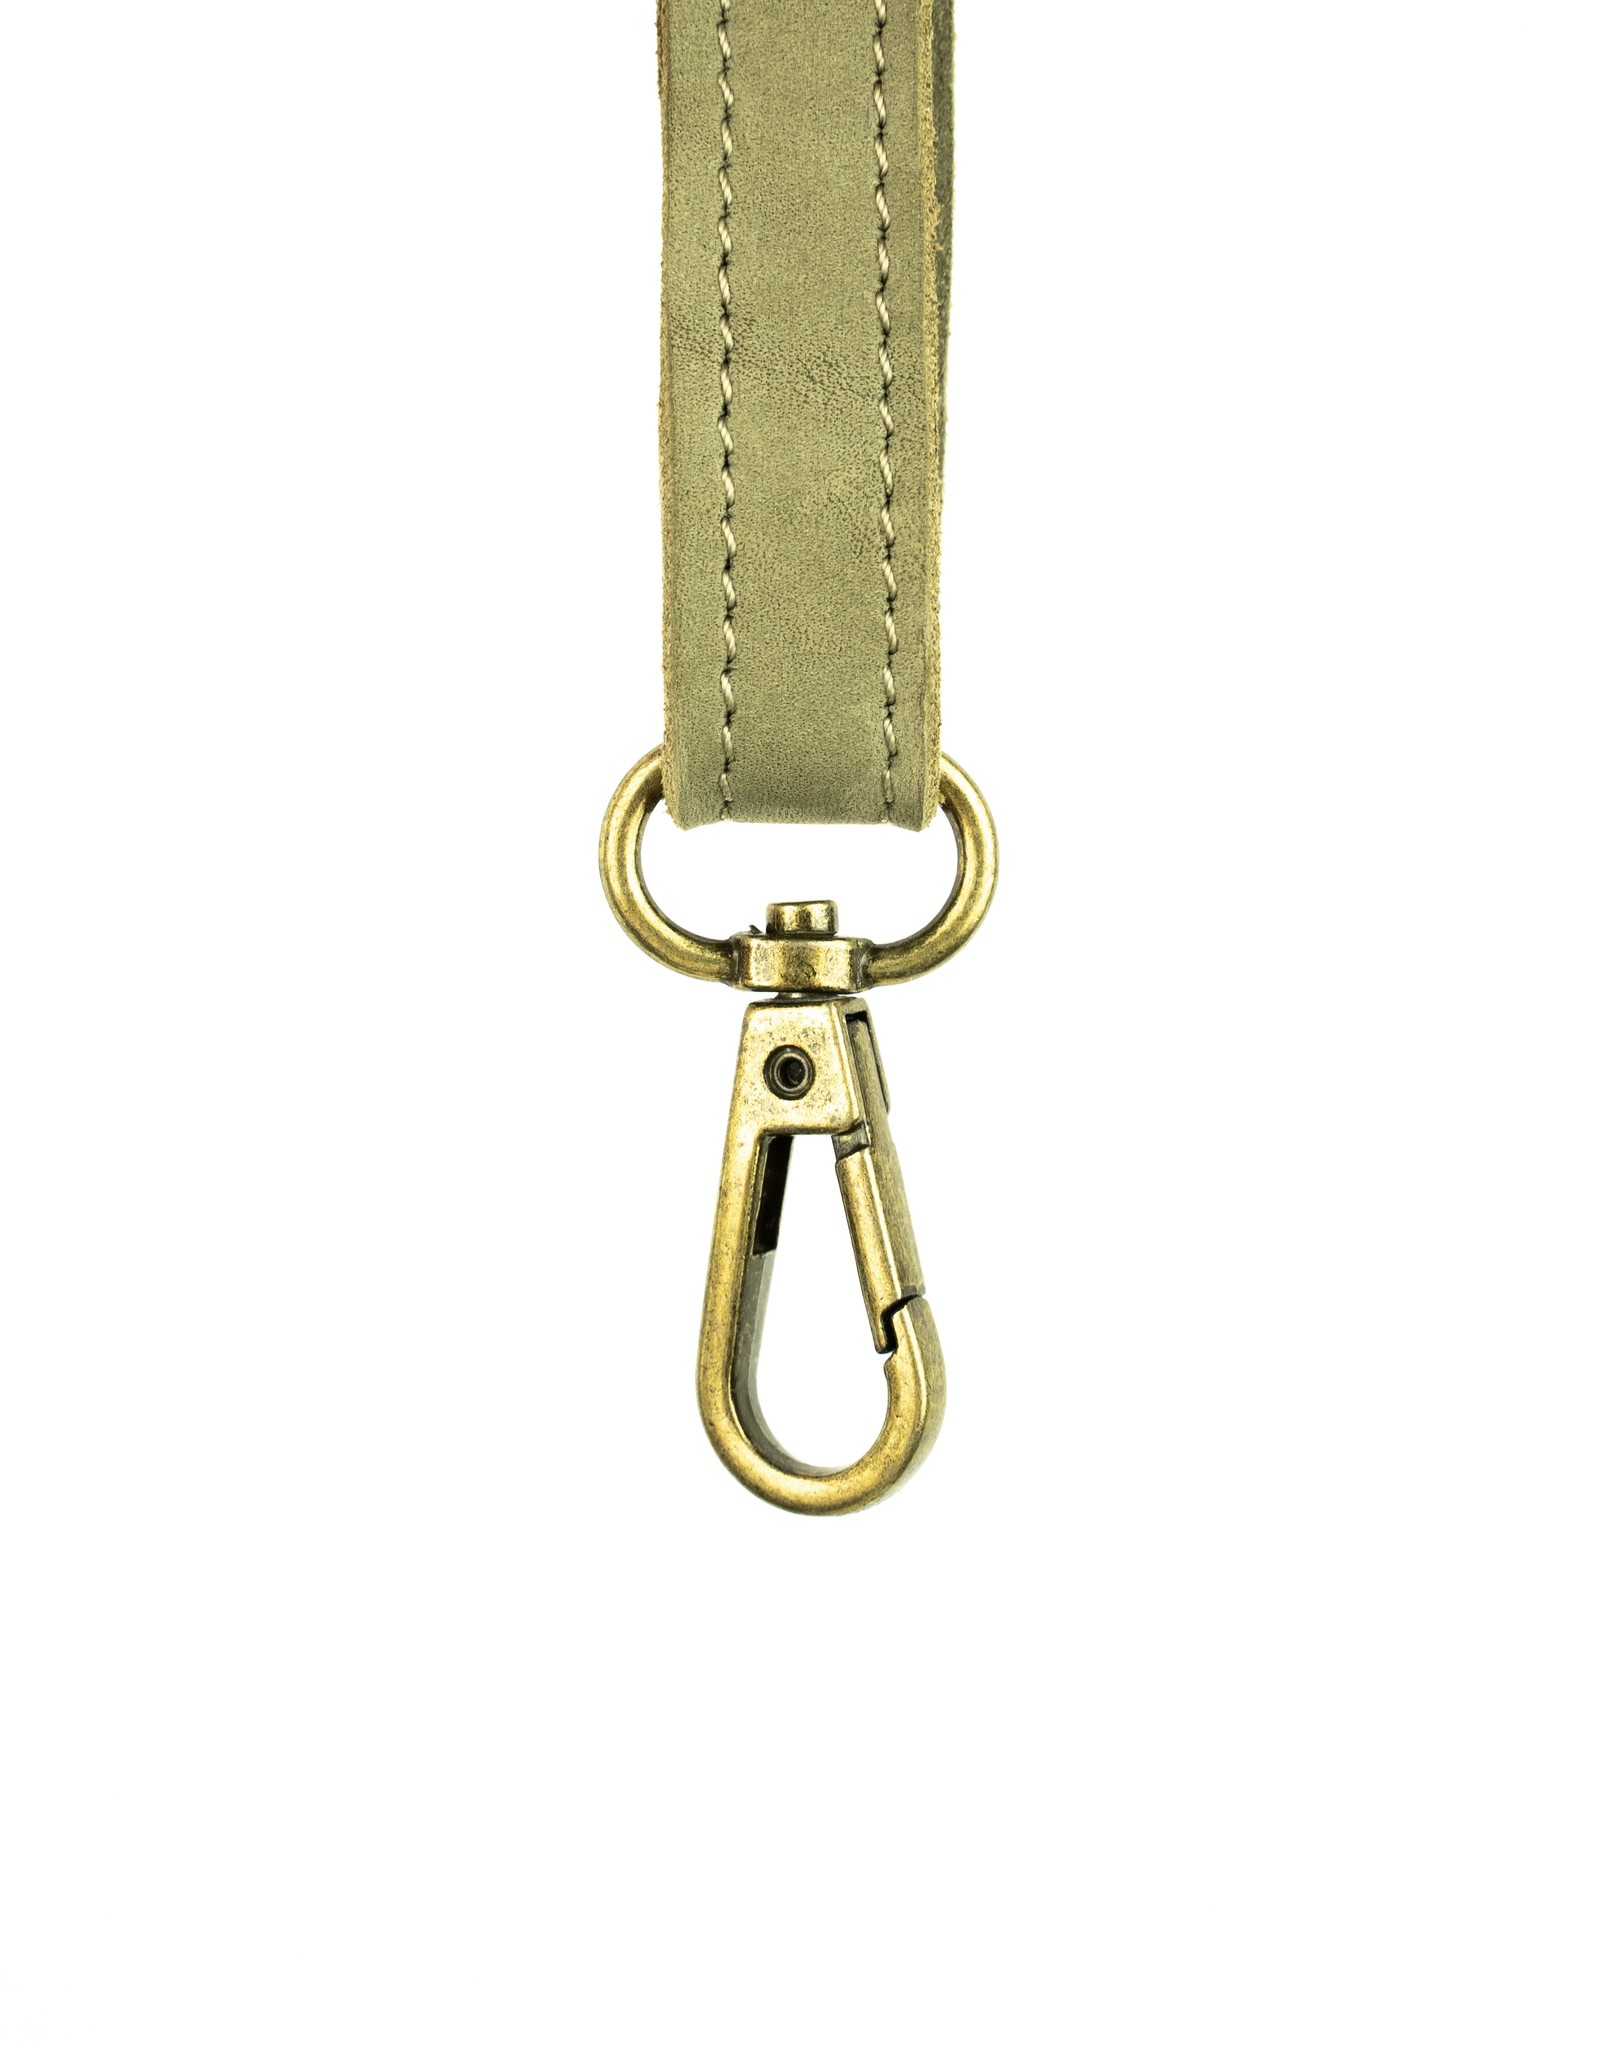 Maisha.Style Maisha purse - olive suede leather purse with tone on tone beads